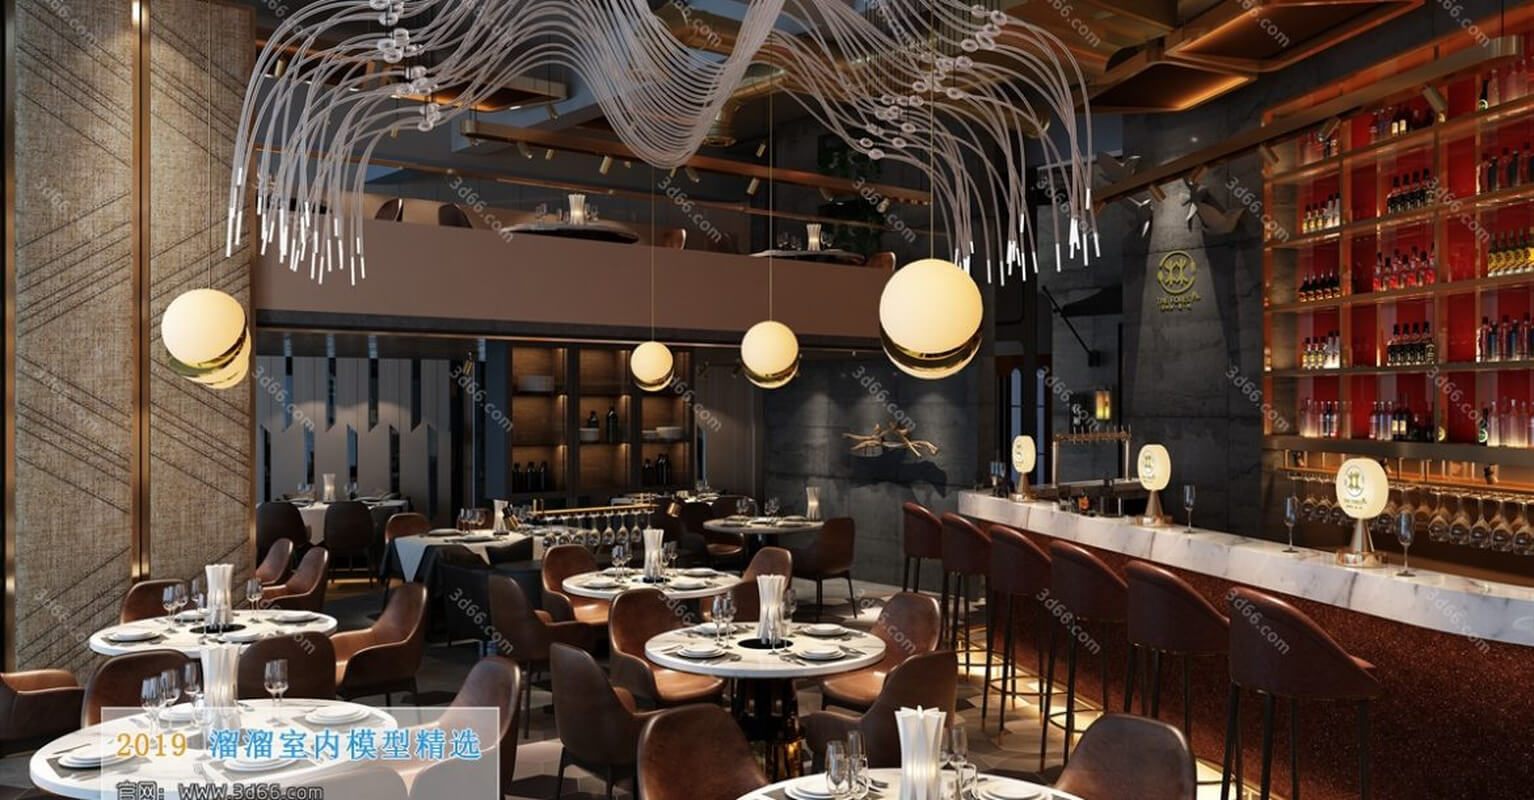 3D66 Hotel & Teahouse & Cafe Interior 2019 Style (06)